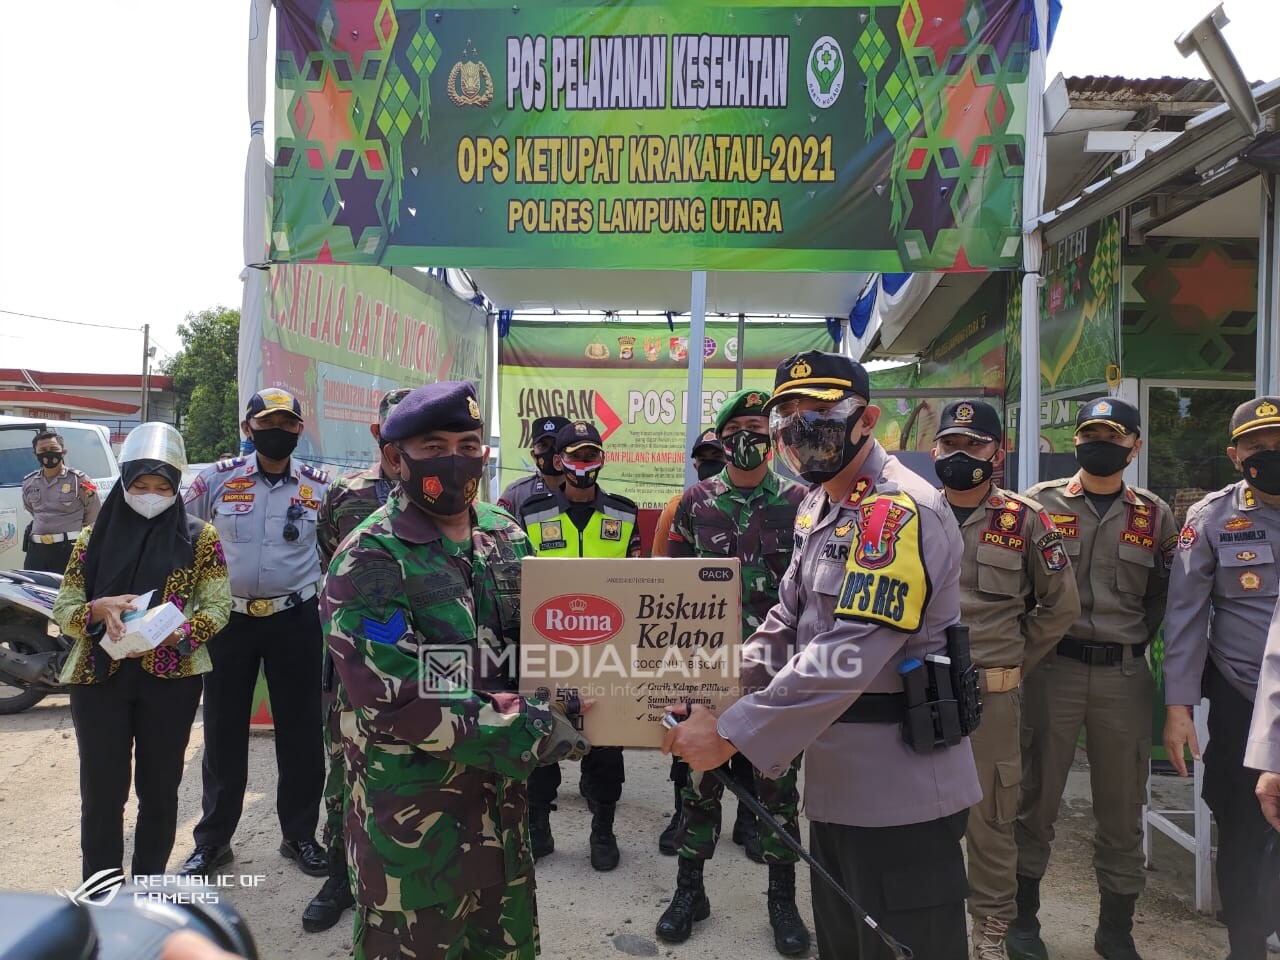 Wakapolda Lampung Kunjungi Pos Pengamanan OKK 2021 di Lampura